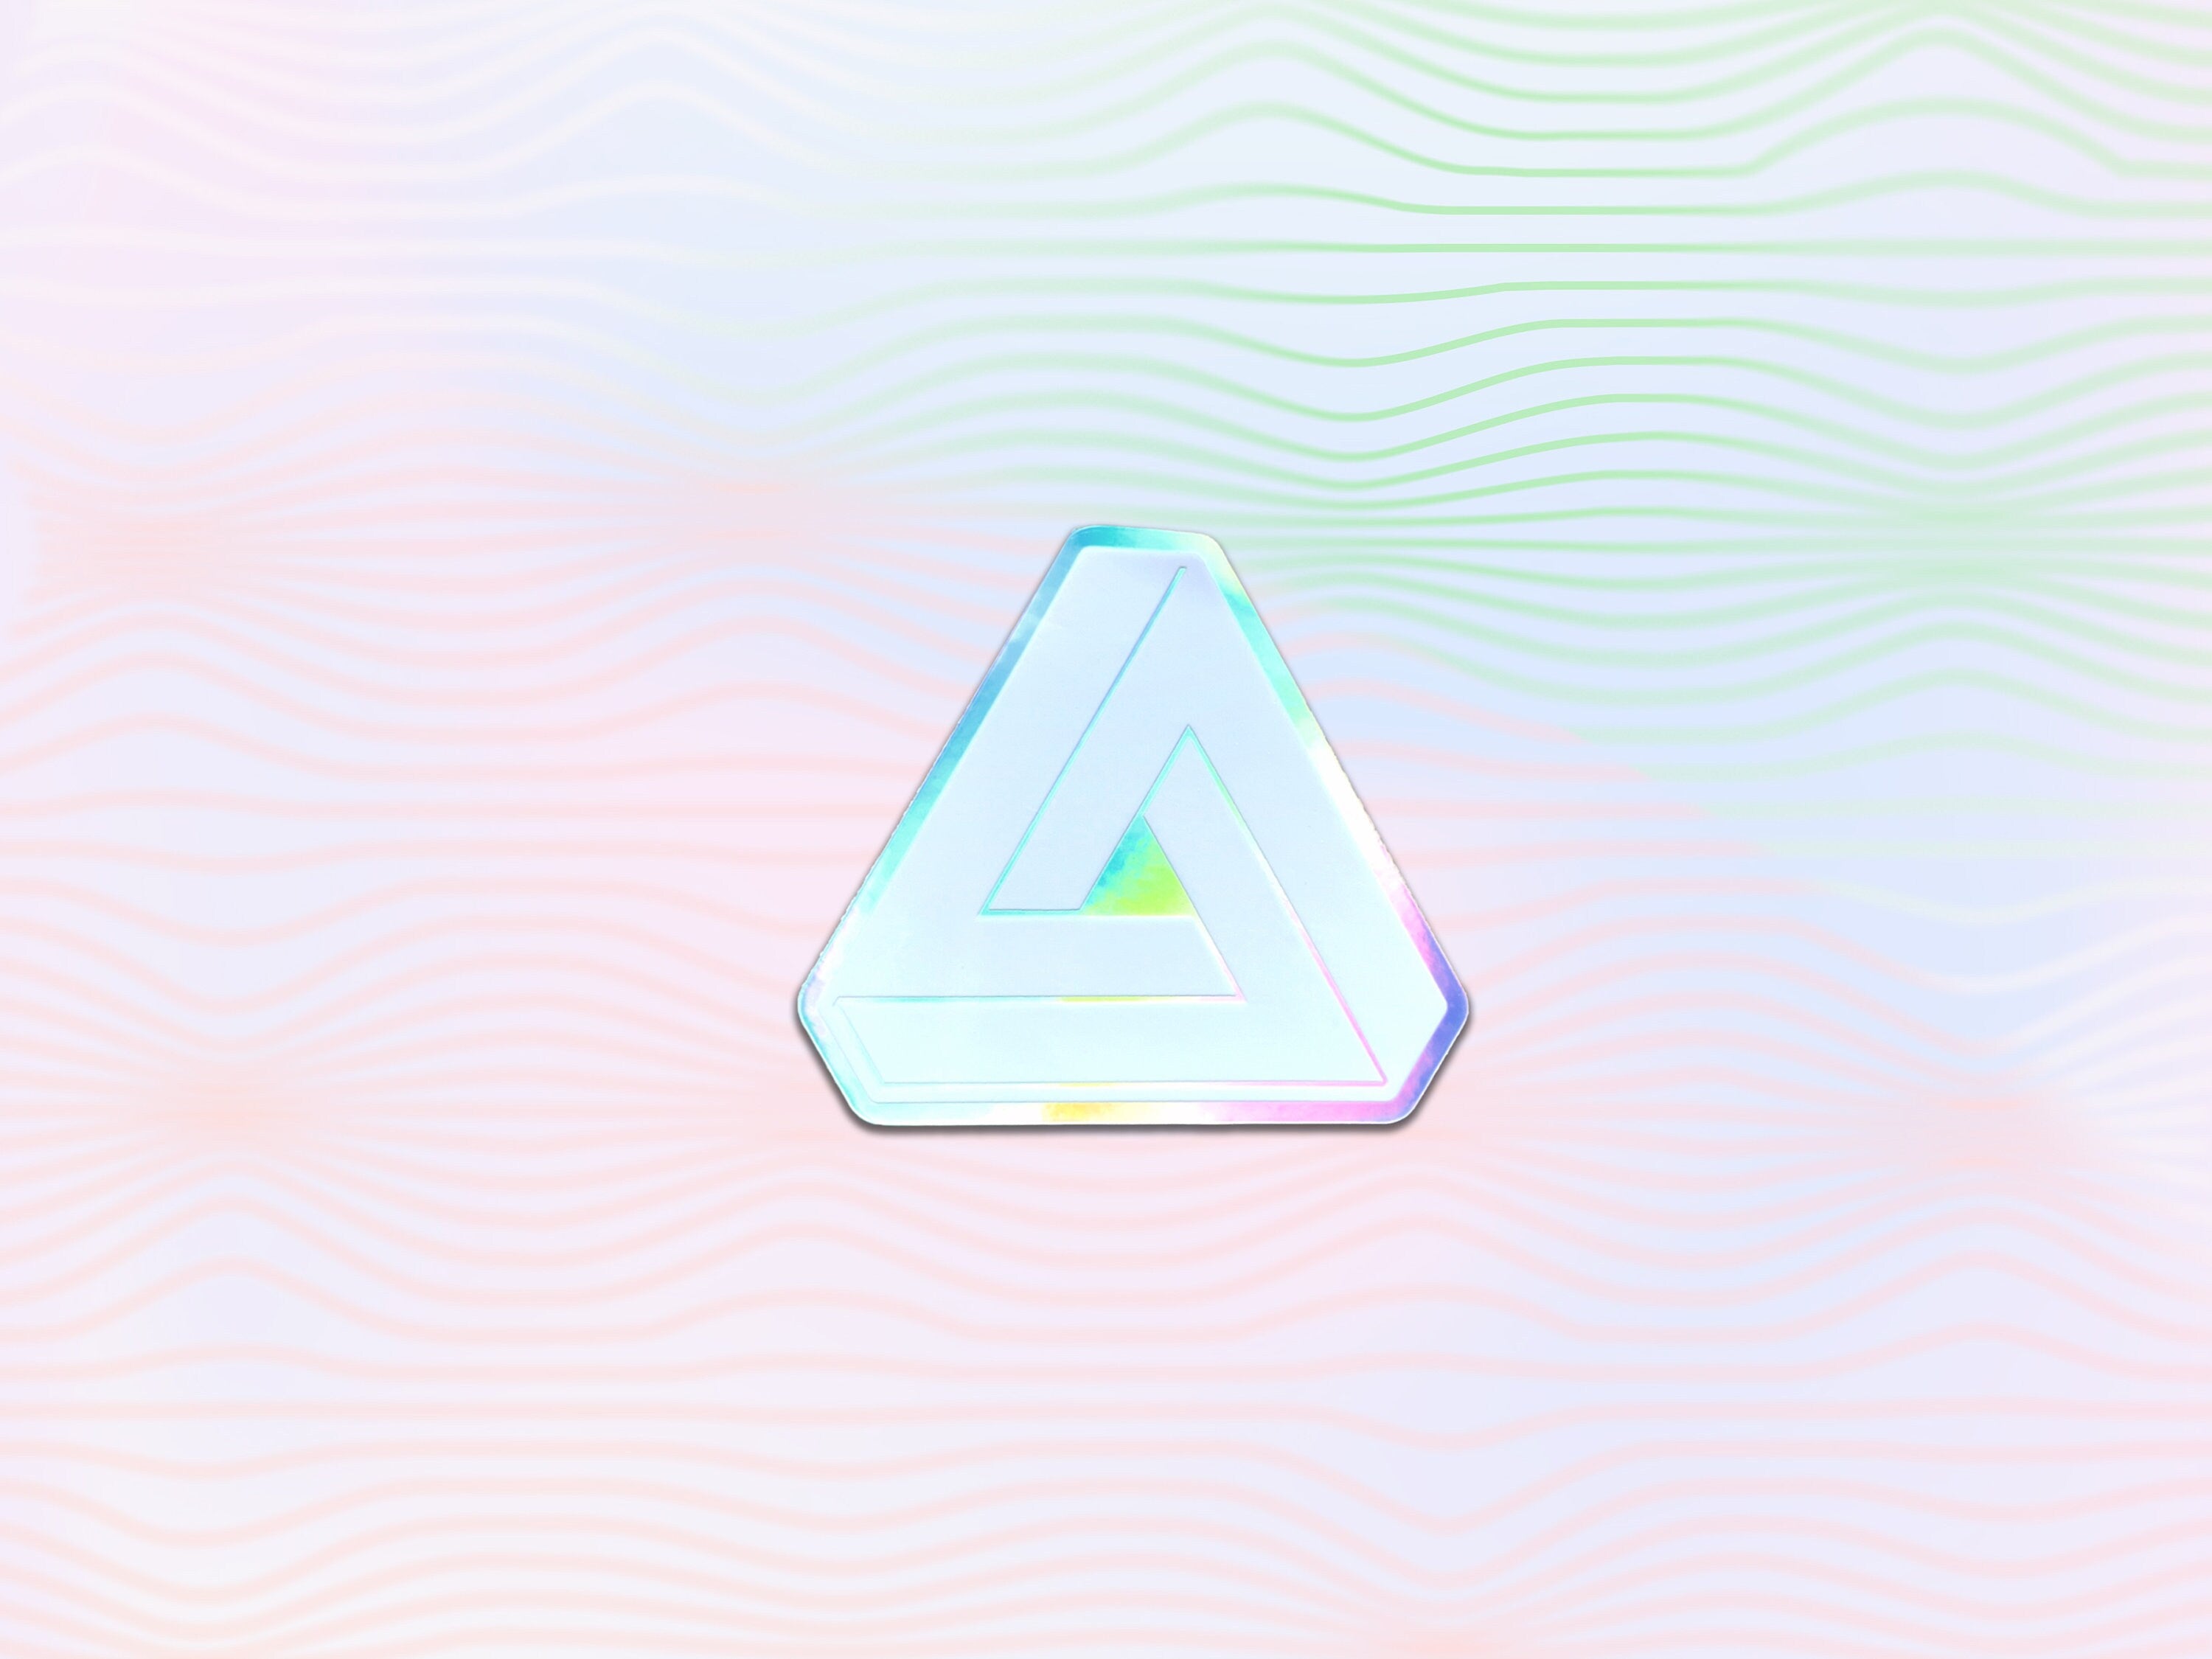 Penrose Triangle Cyberpunk Decal - Futuristic / Minimalist Holographic Sticker - Optical Illusion Math & Geometry Laptop Sticker by The Sciencey